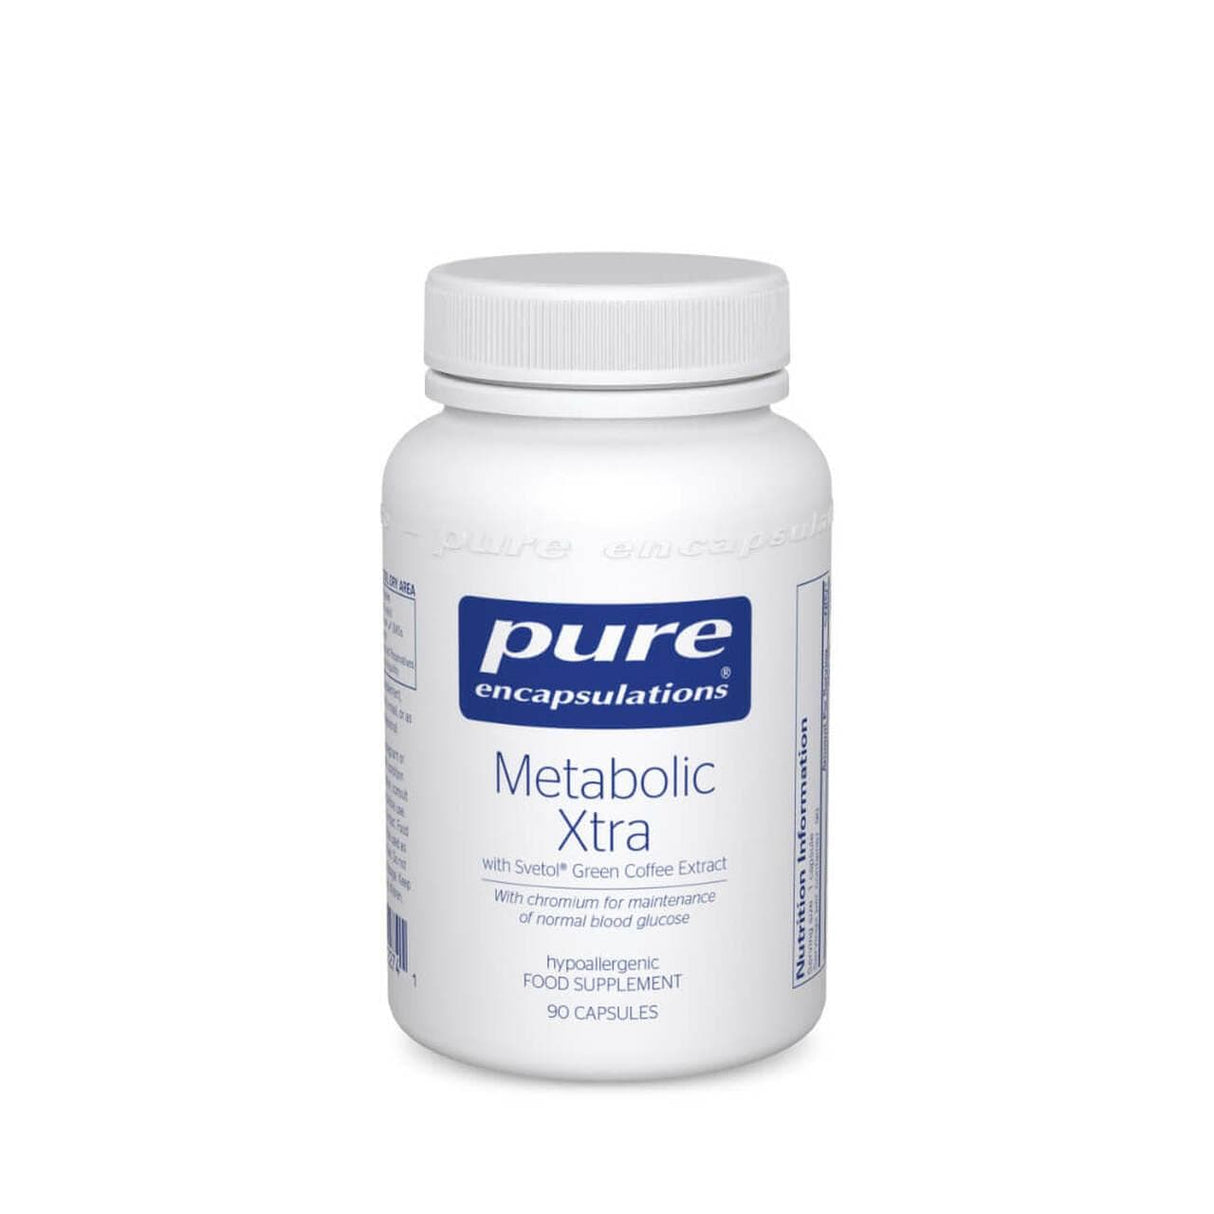 Metabolic Xtra with SvetolÂ® Green Coffee Extract, 90 capsules - Pure Encapsulations - welzo